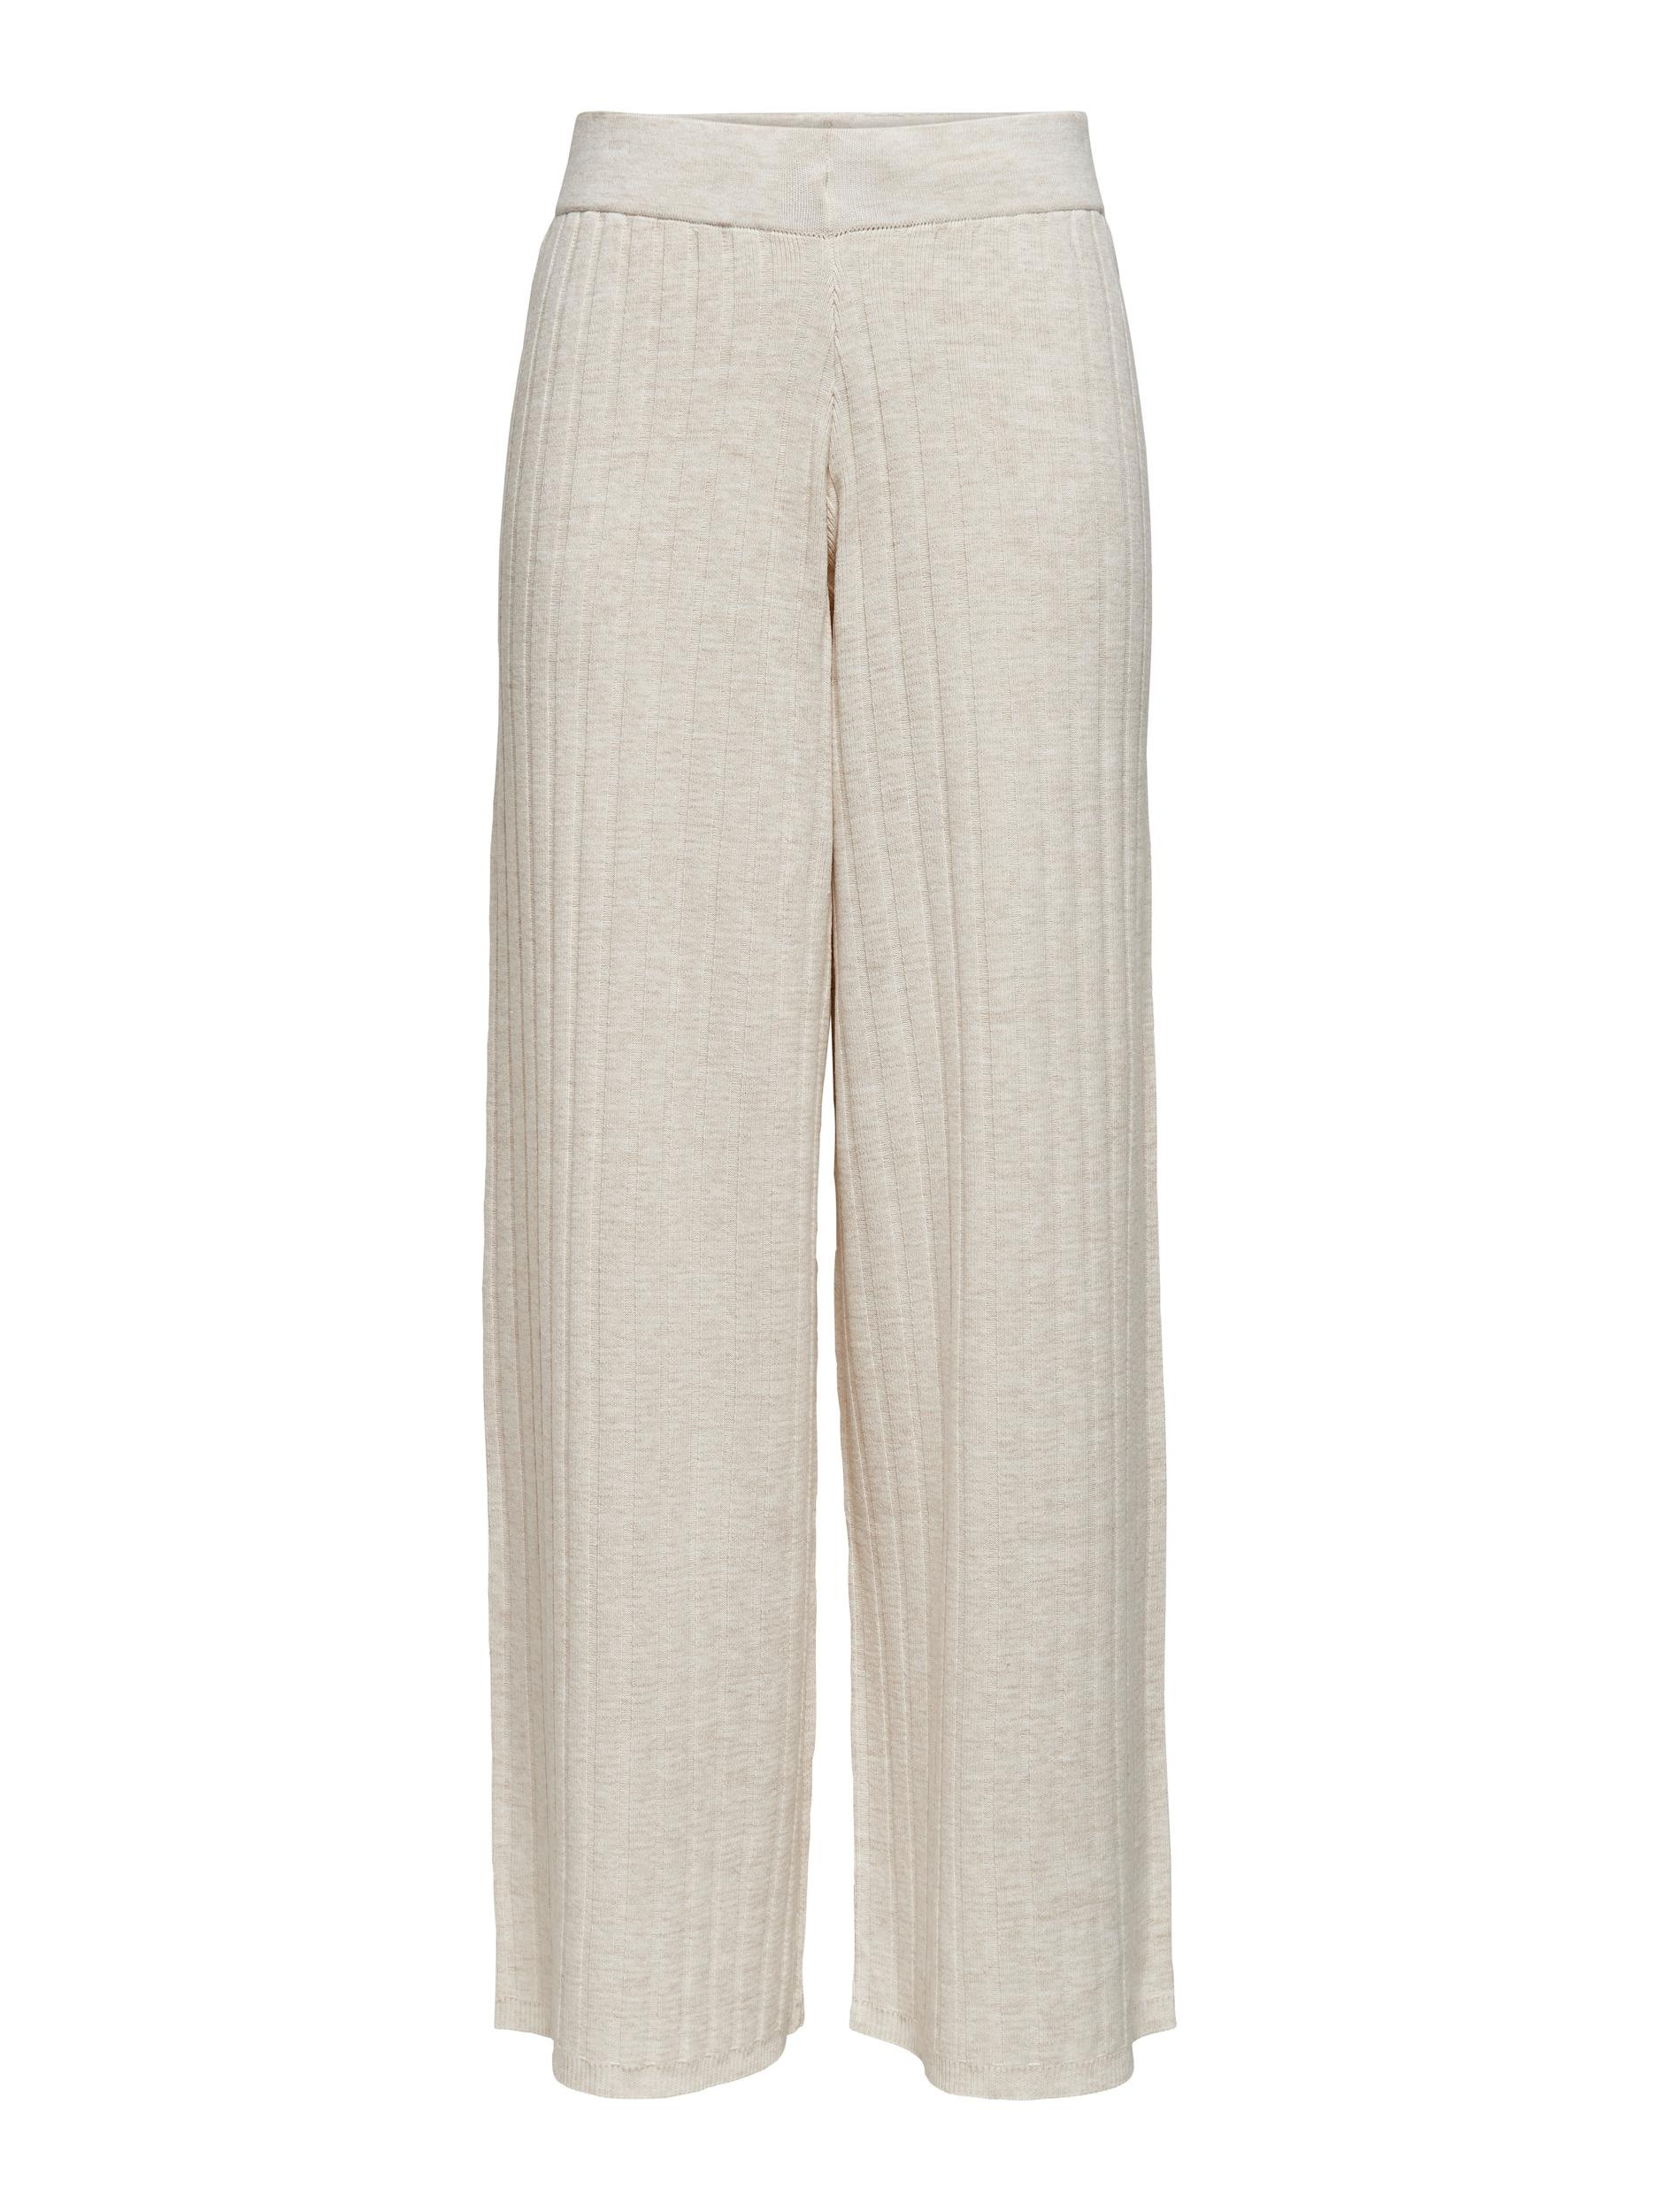 Pantaloni a vita alta, Bianco, large image number 0